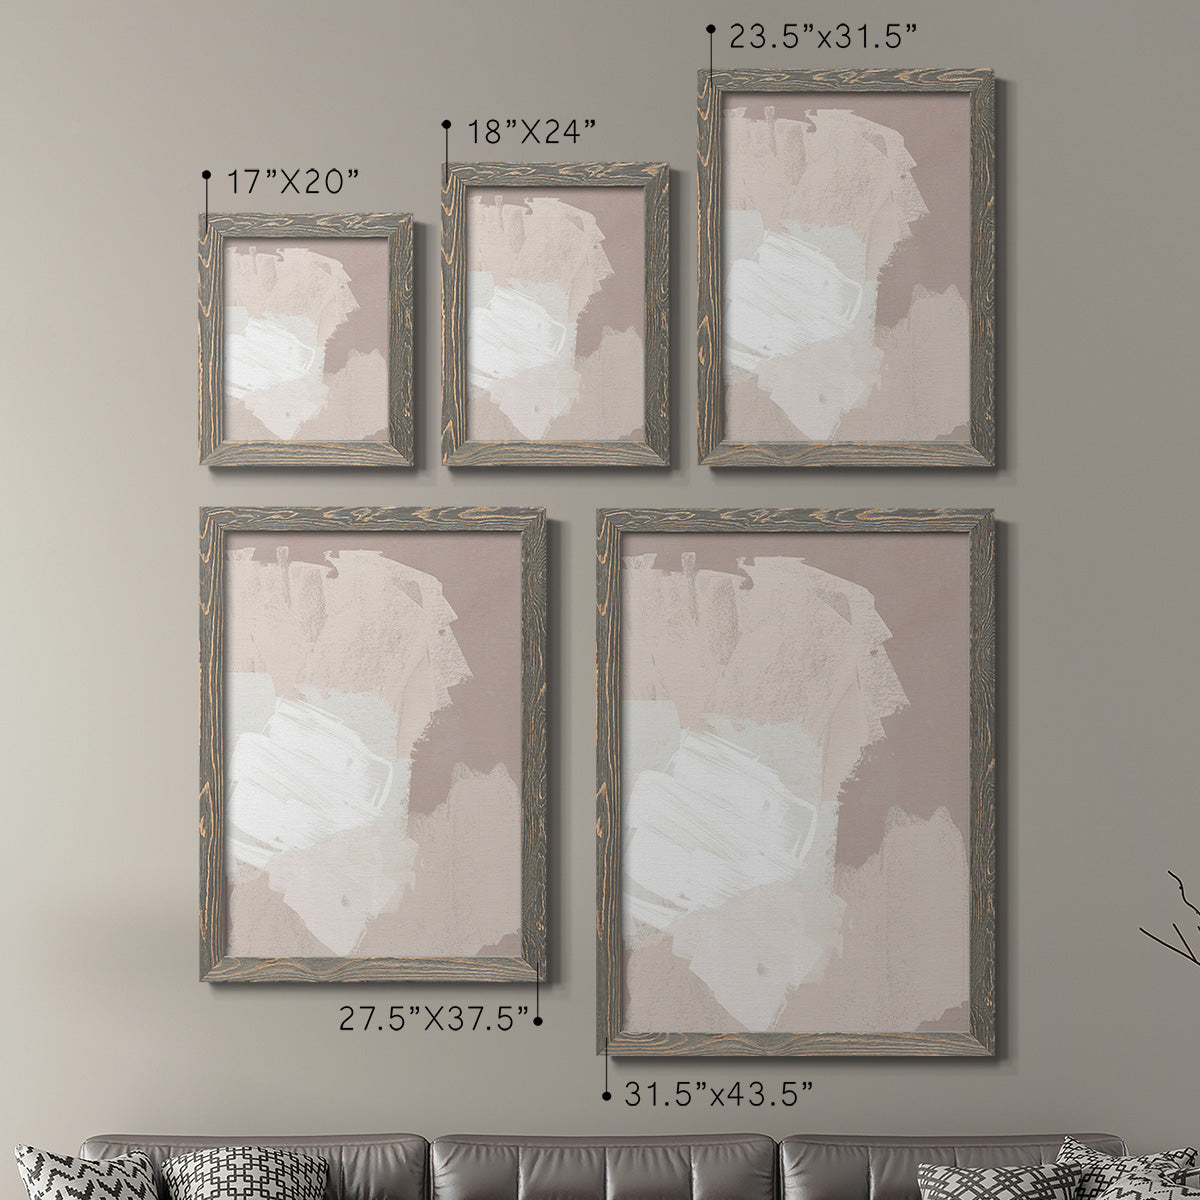 Cloud Slate I - Premium Framed Canvas 2 Piece Set - Ready to Hang